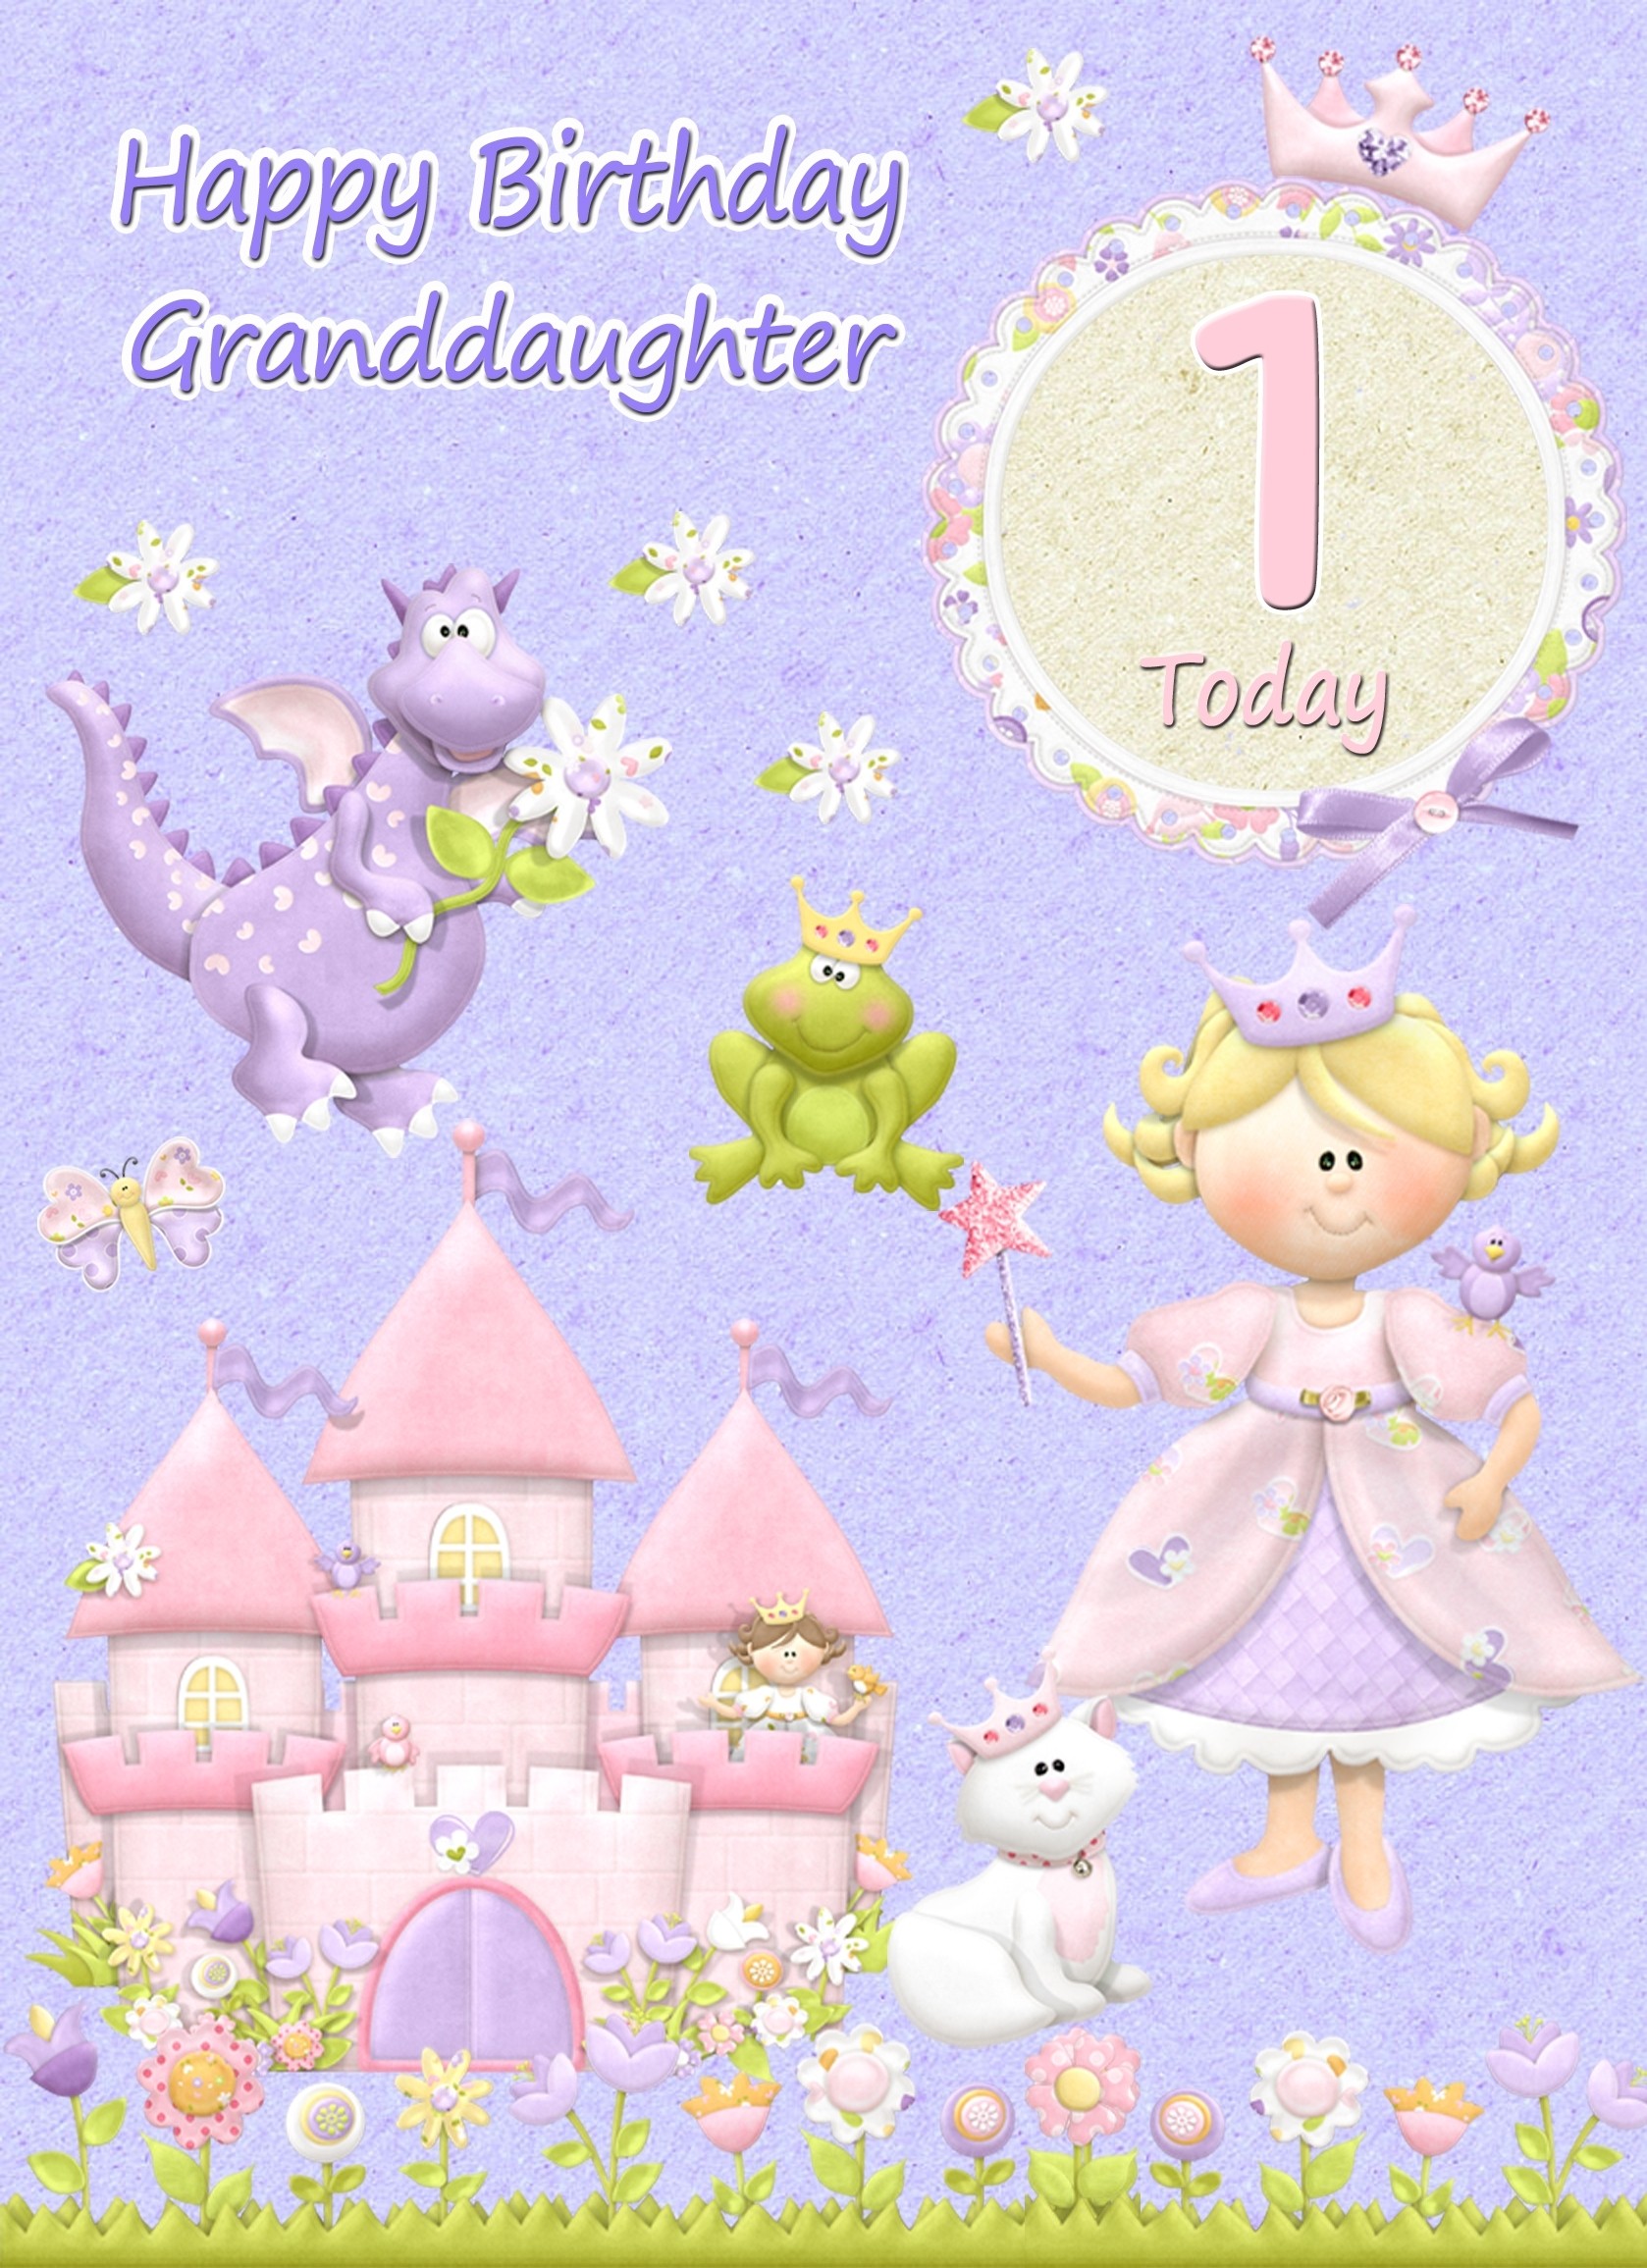 Kids 1st Birthday Princess Cartoon Card for Granddaughter